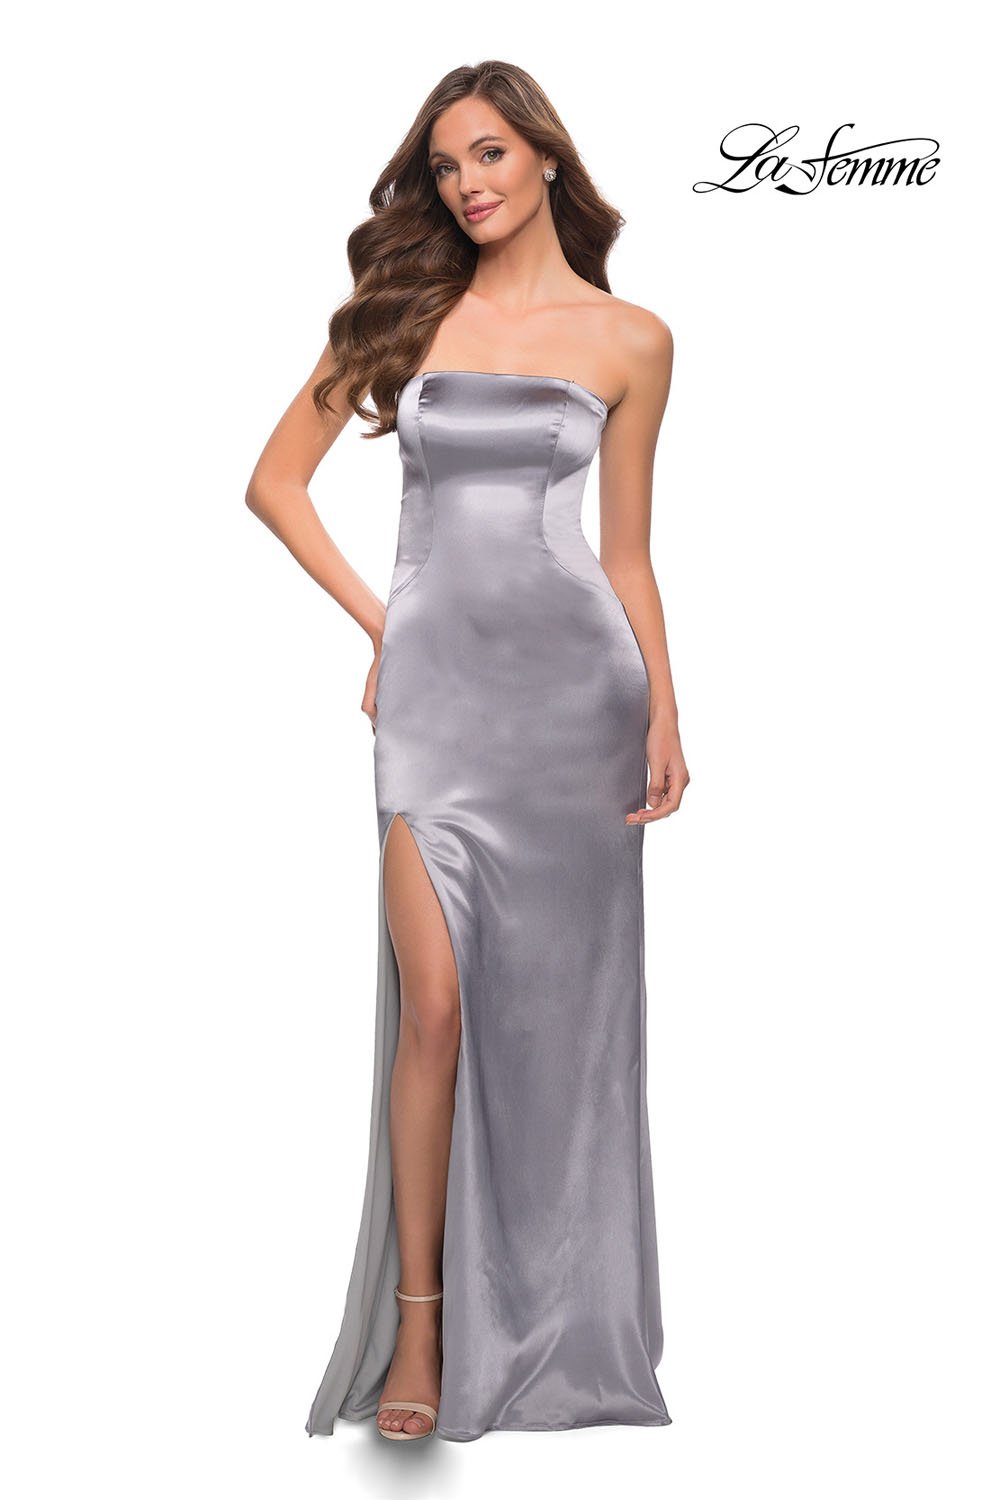 La Femme 29807 Dresses